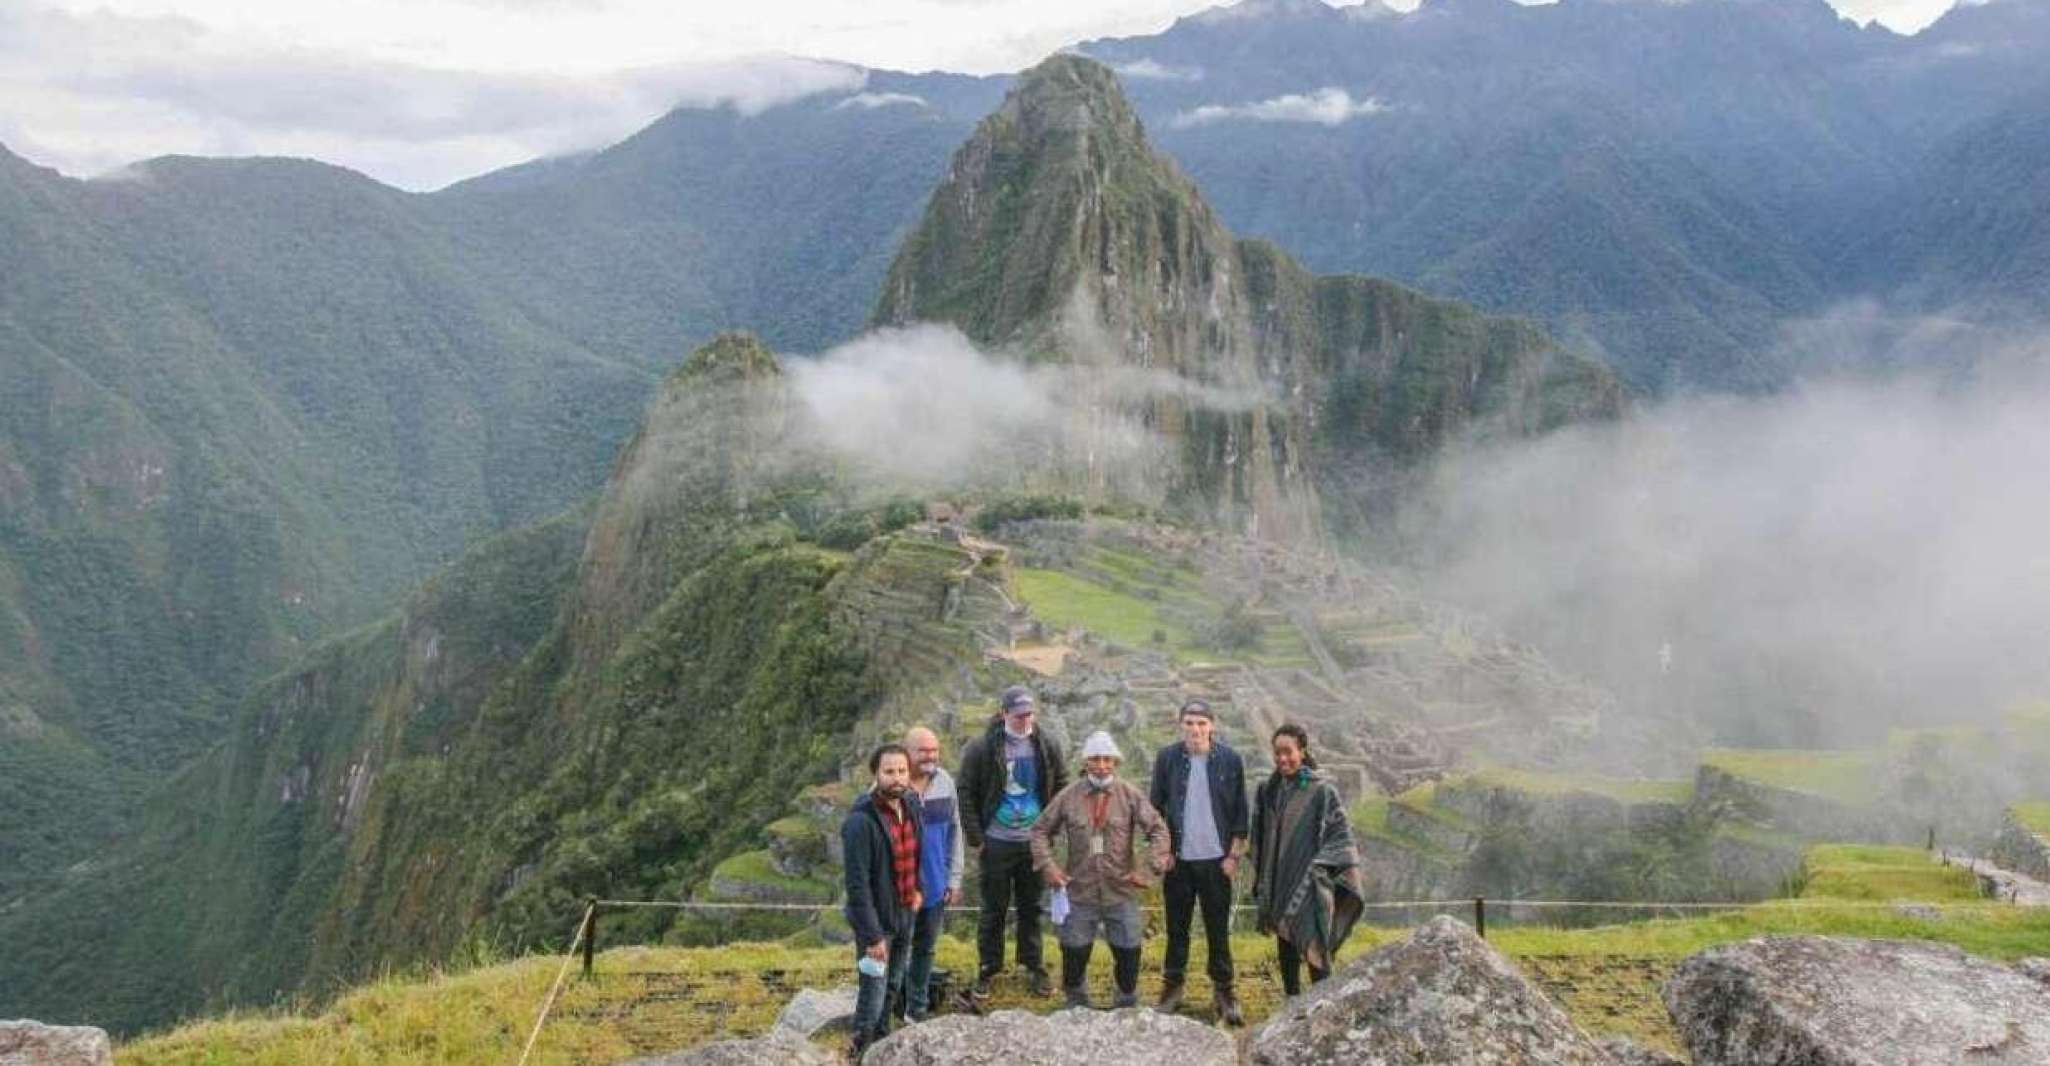 Entrance tickets to Machu Picchu - Housity